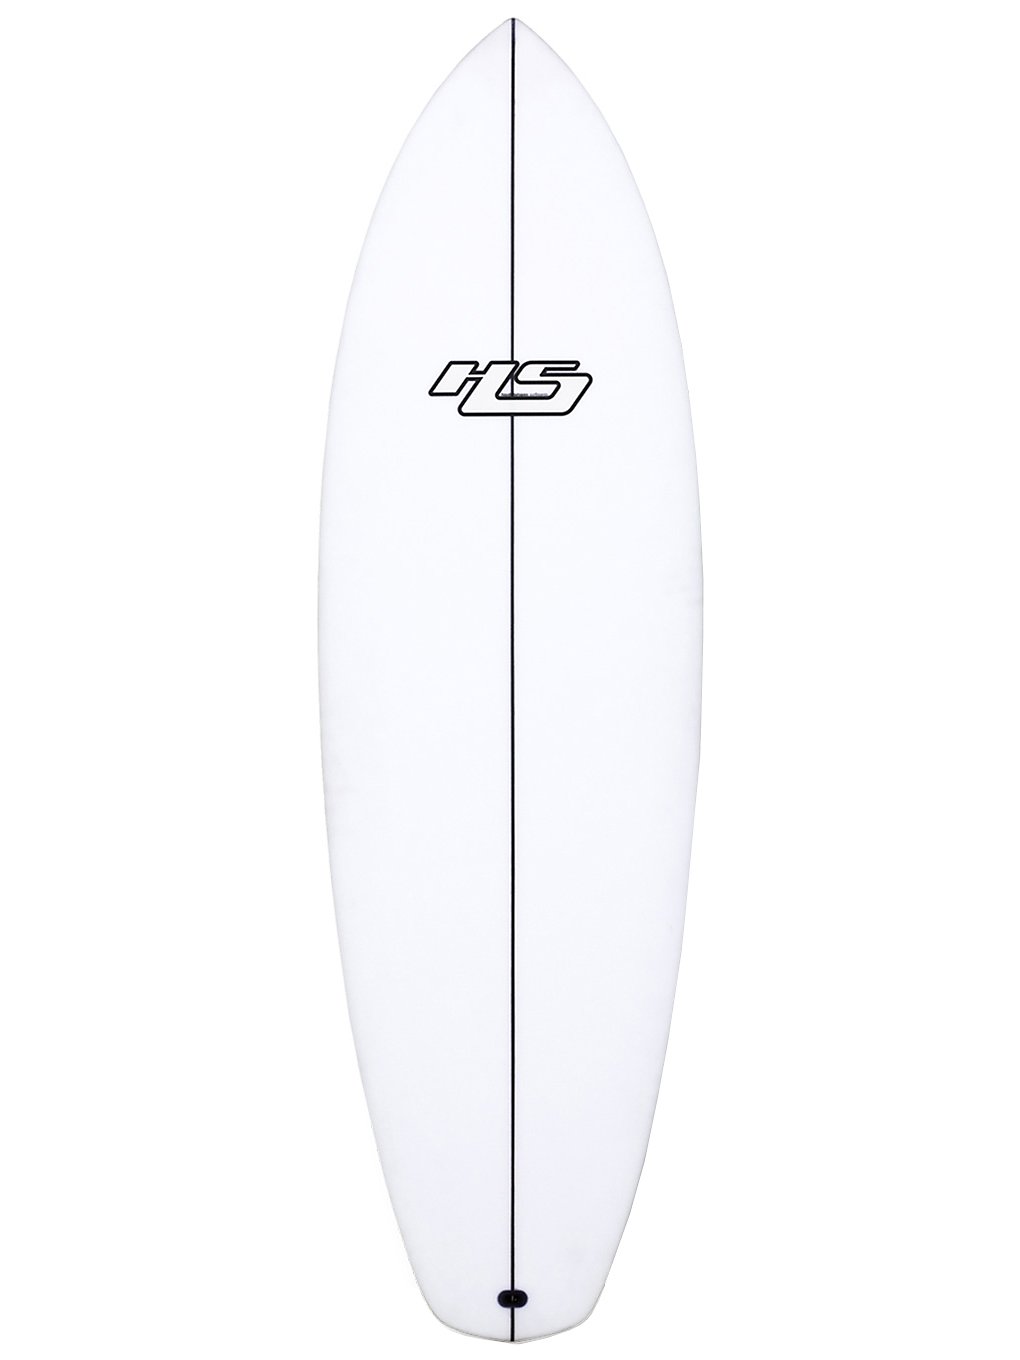 Haydenshapes Loot PU/Comp Stringer Futuress 5'10 Surfboard model logo